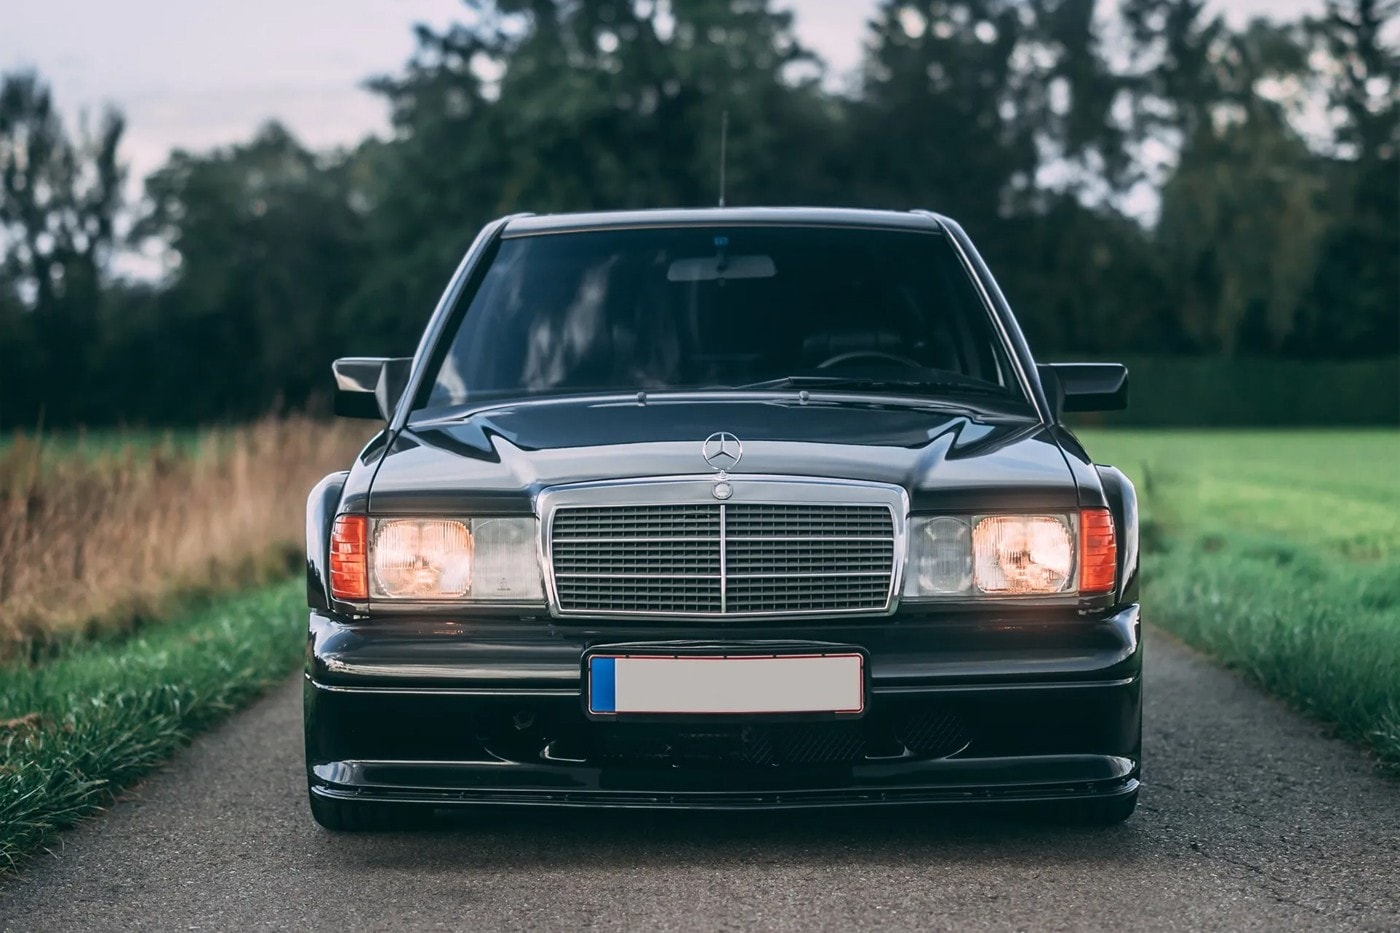 1990 年出廠 Mercedes-Benz 190E Evolution II 即將展開拍賣